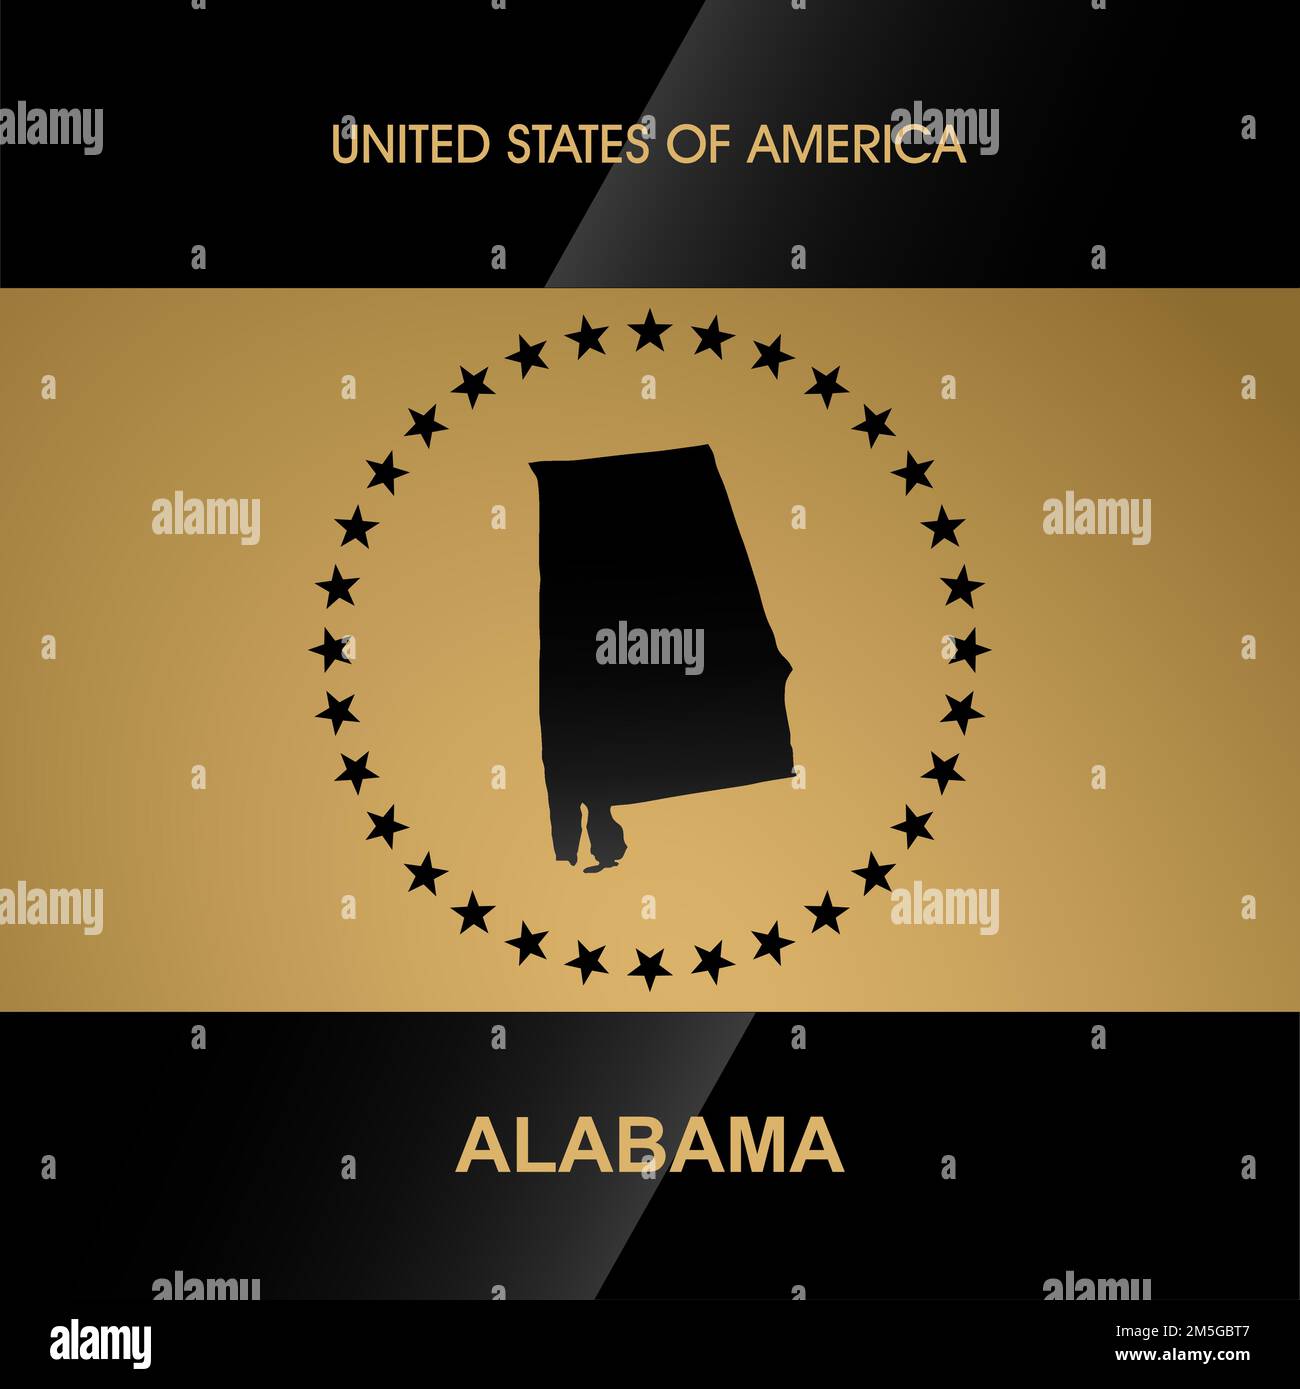 Alabama site vector background Illustration de Vecteur